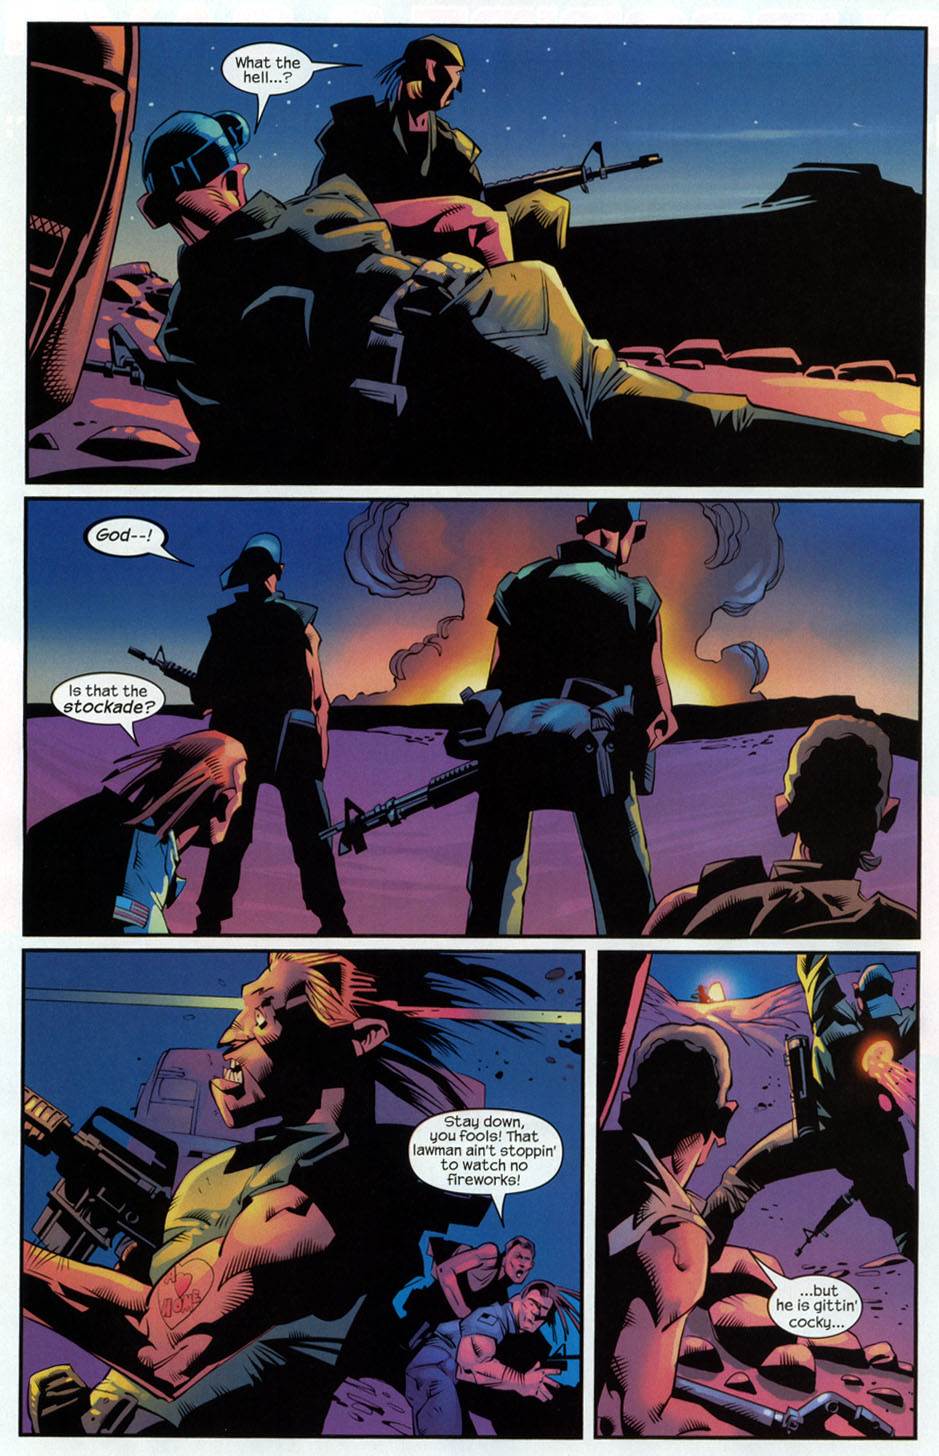 The Punisher (2001) Issue #30 - Streets of Laredo #03 #30 - English 19